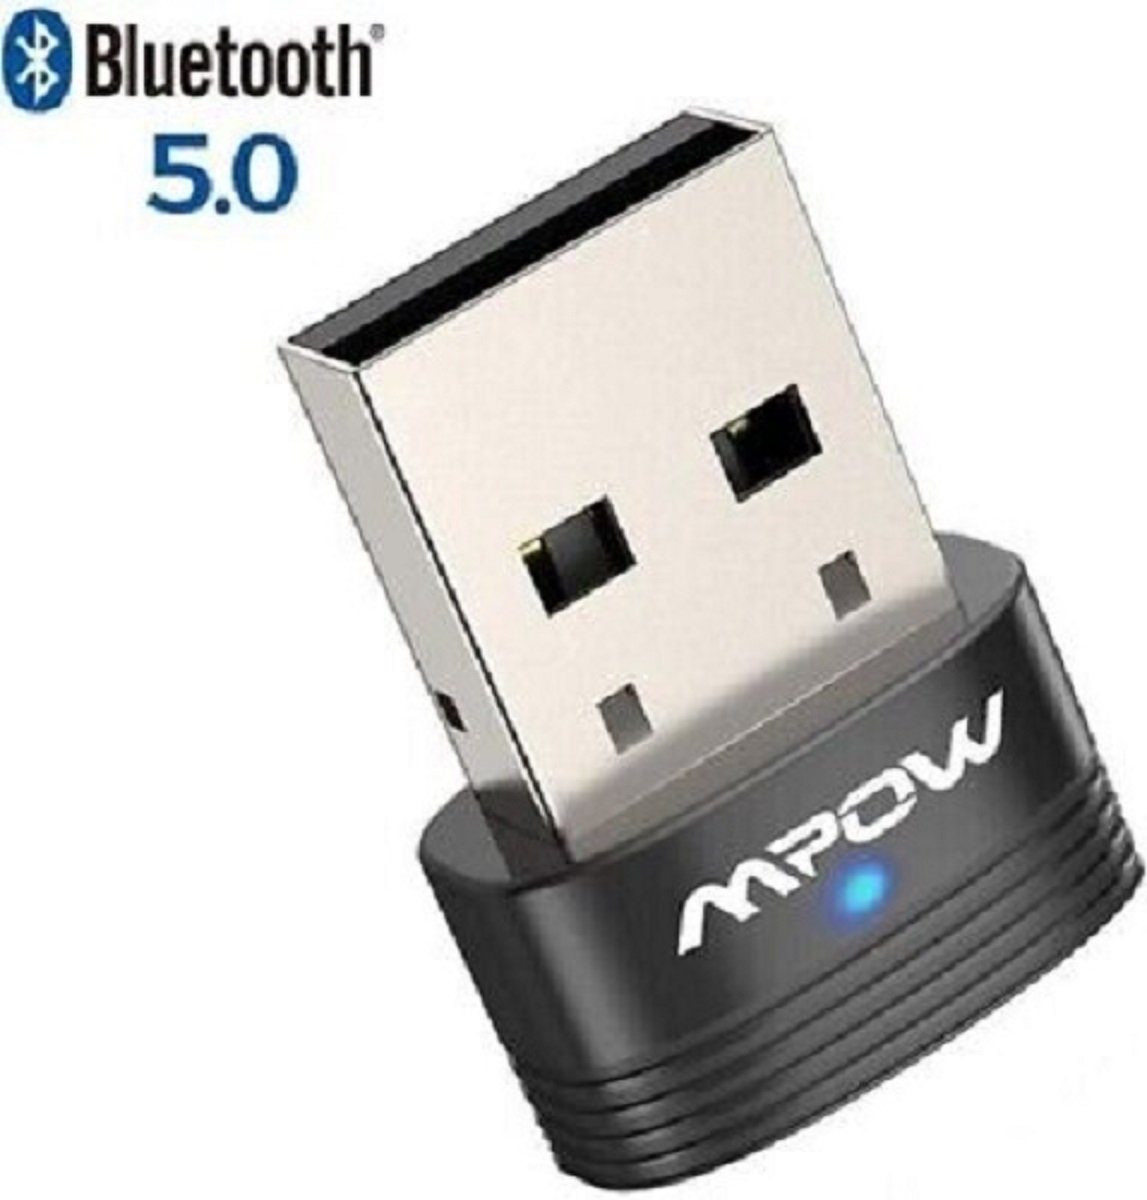 Mpow Bluetooth®-Sender Sender Dongle Empfänger 5.0 USB Bluetooth